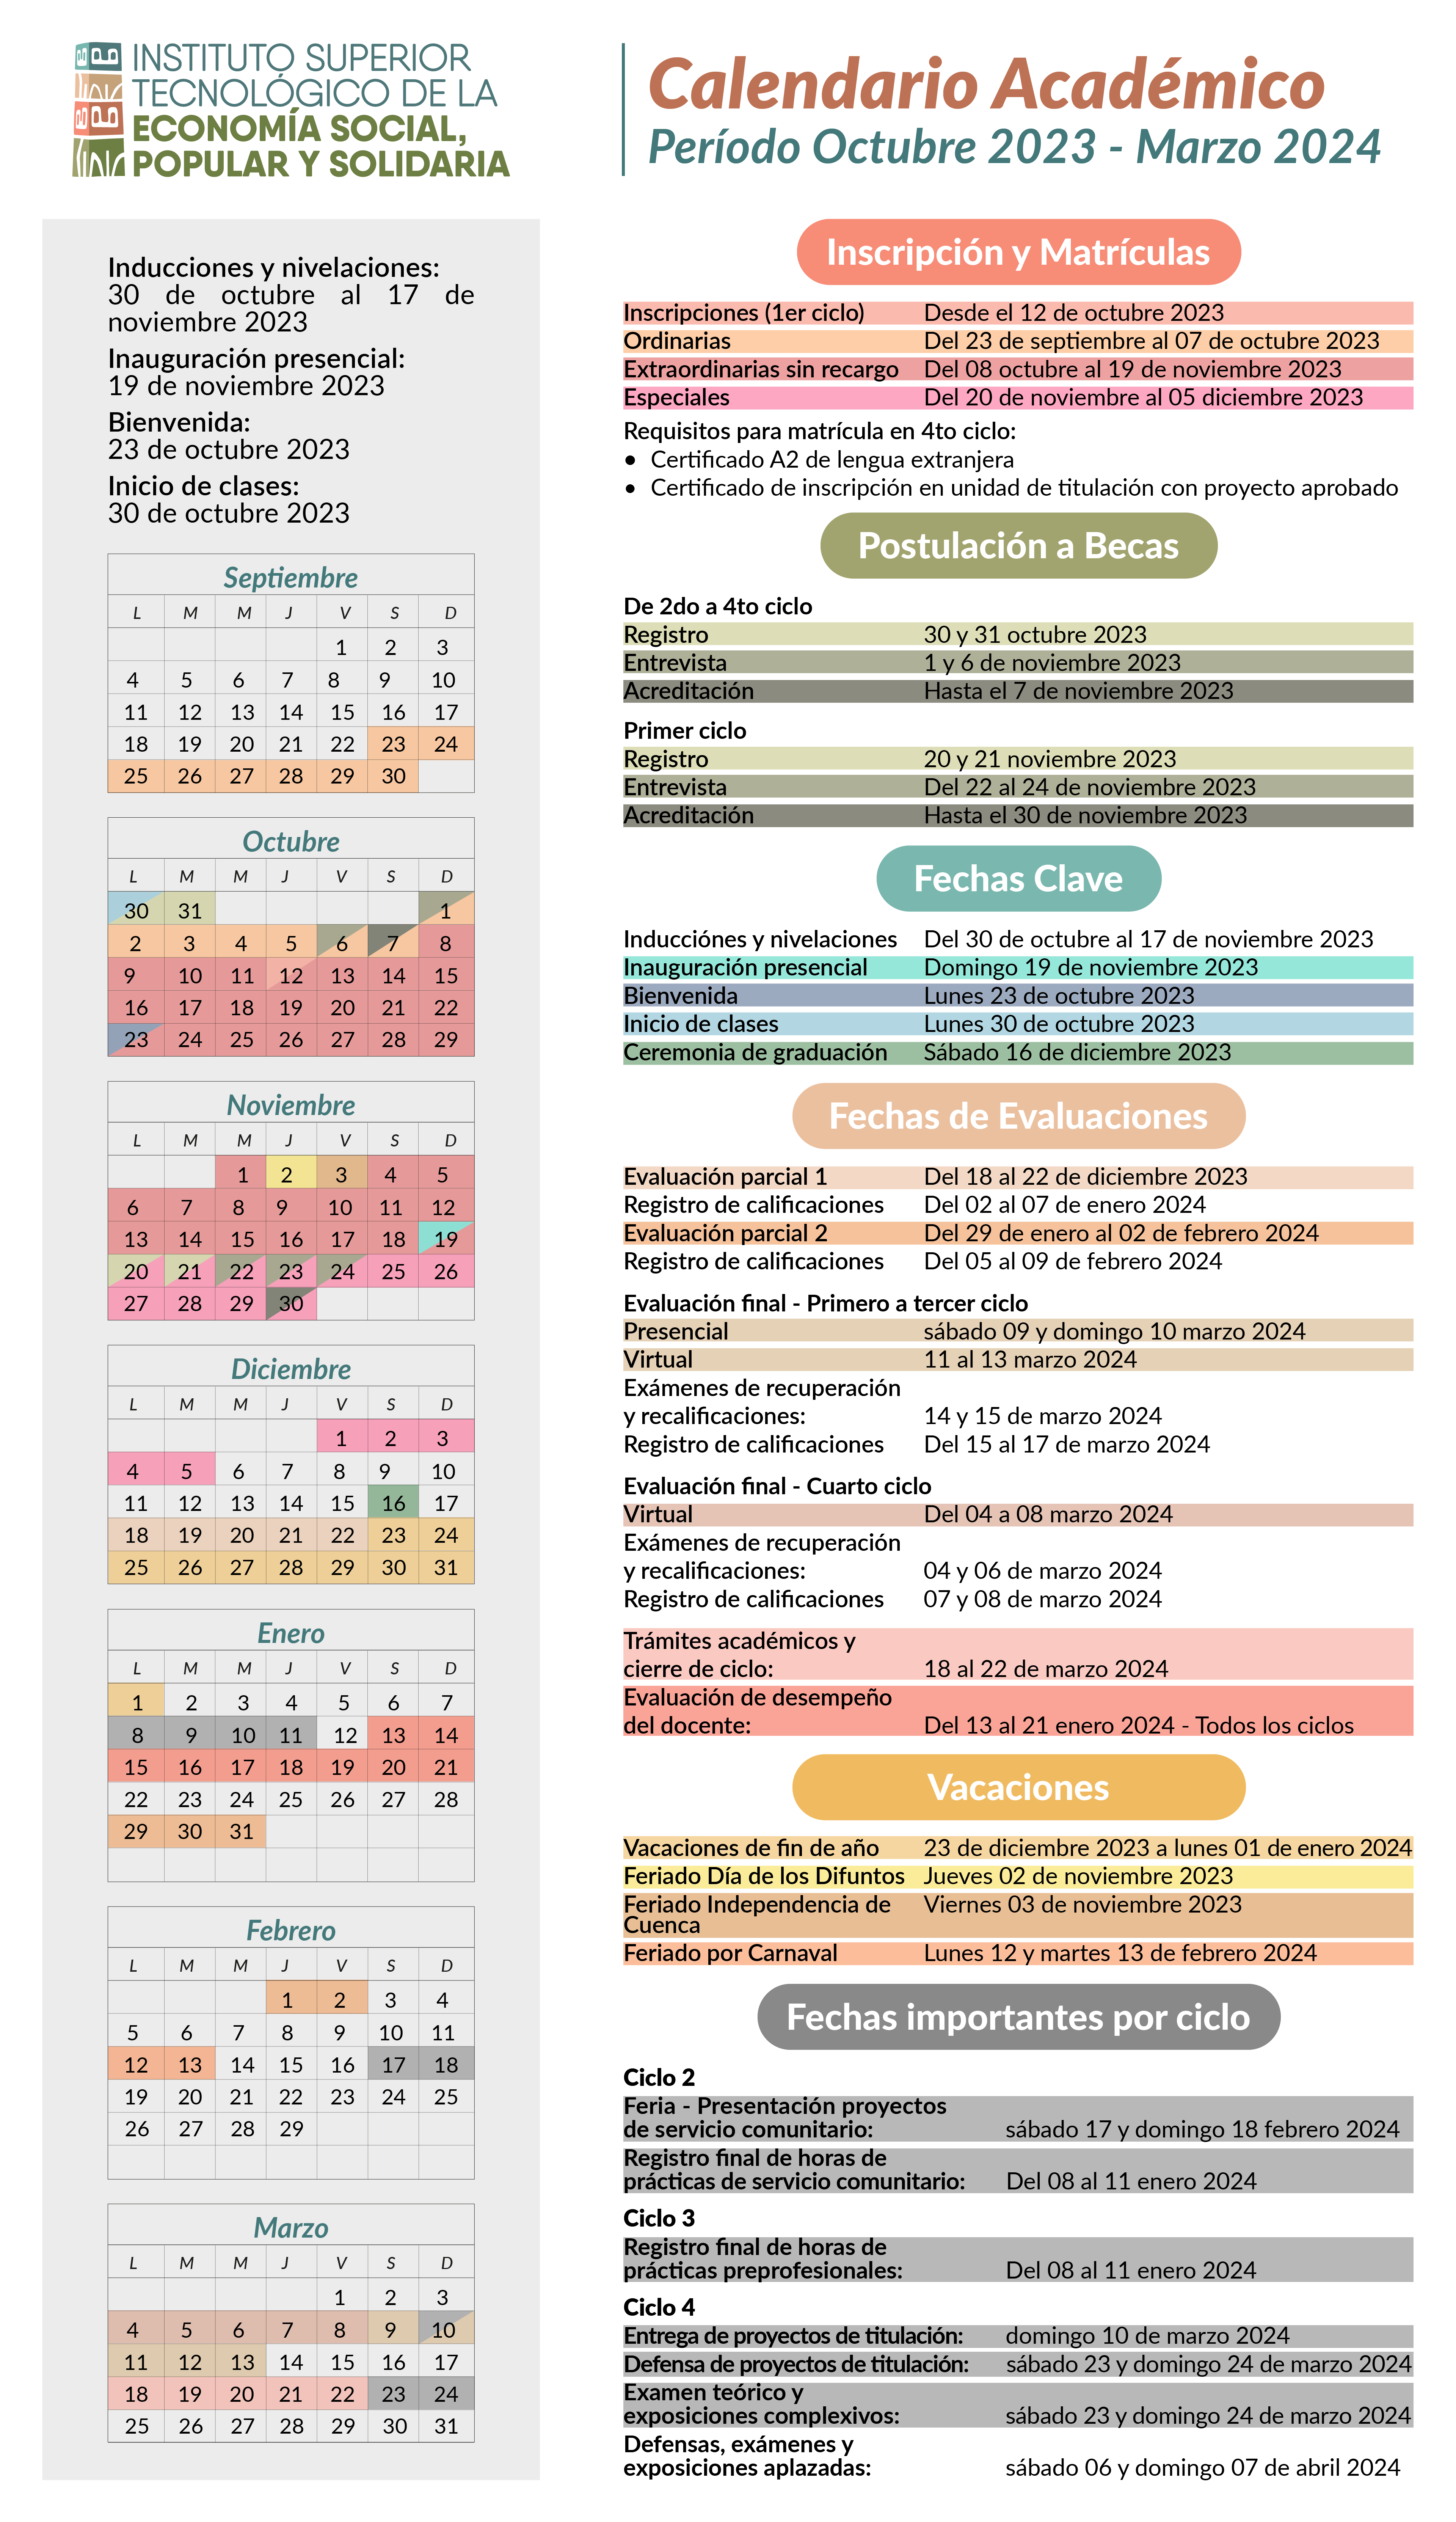 Calendario Académico ISTEPS Periodo académico octubre 2023 a marzo 2024